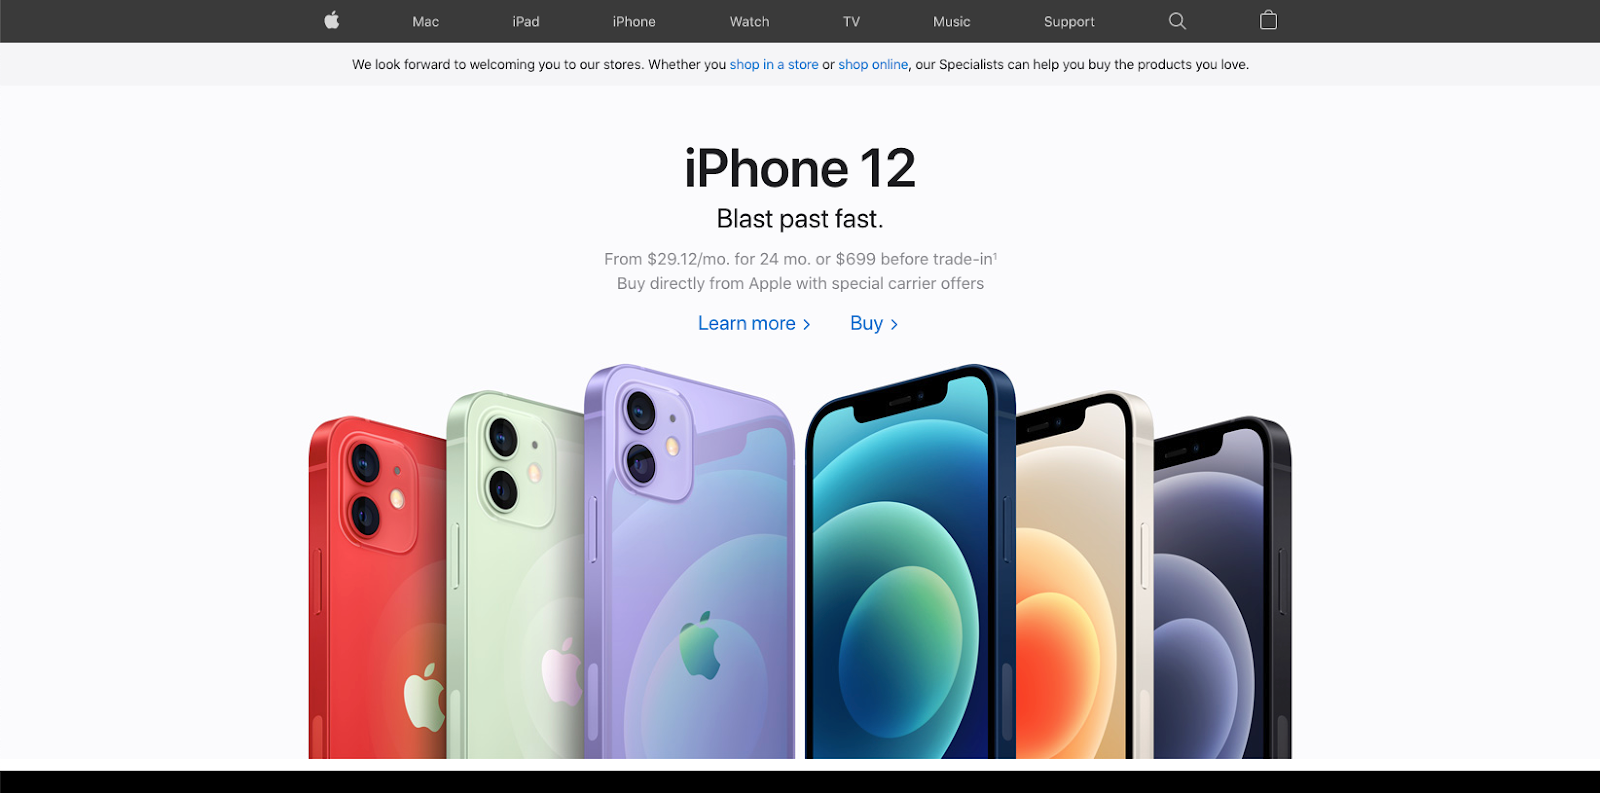 Apple's minimalist website design matches its brand